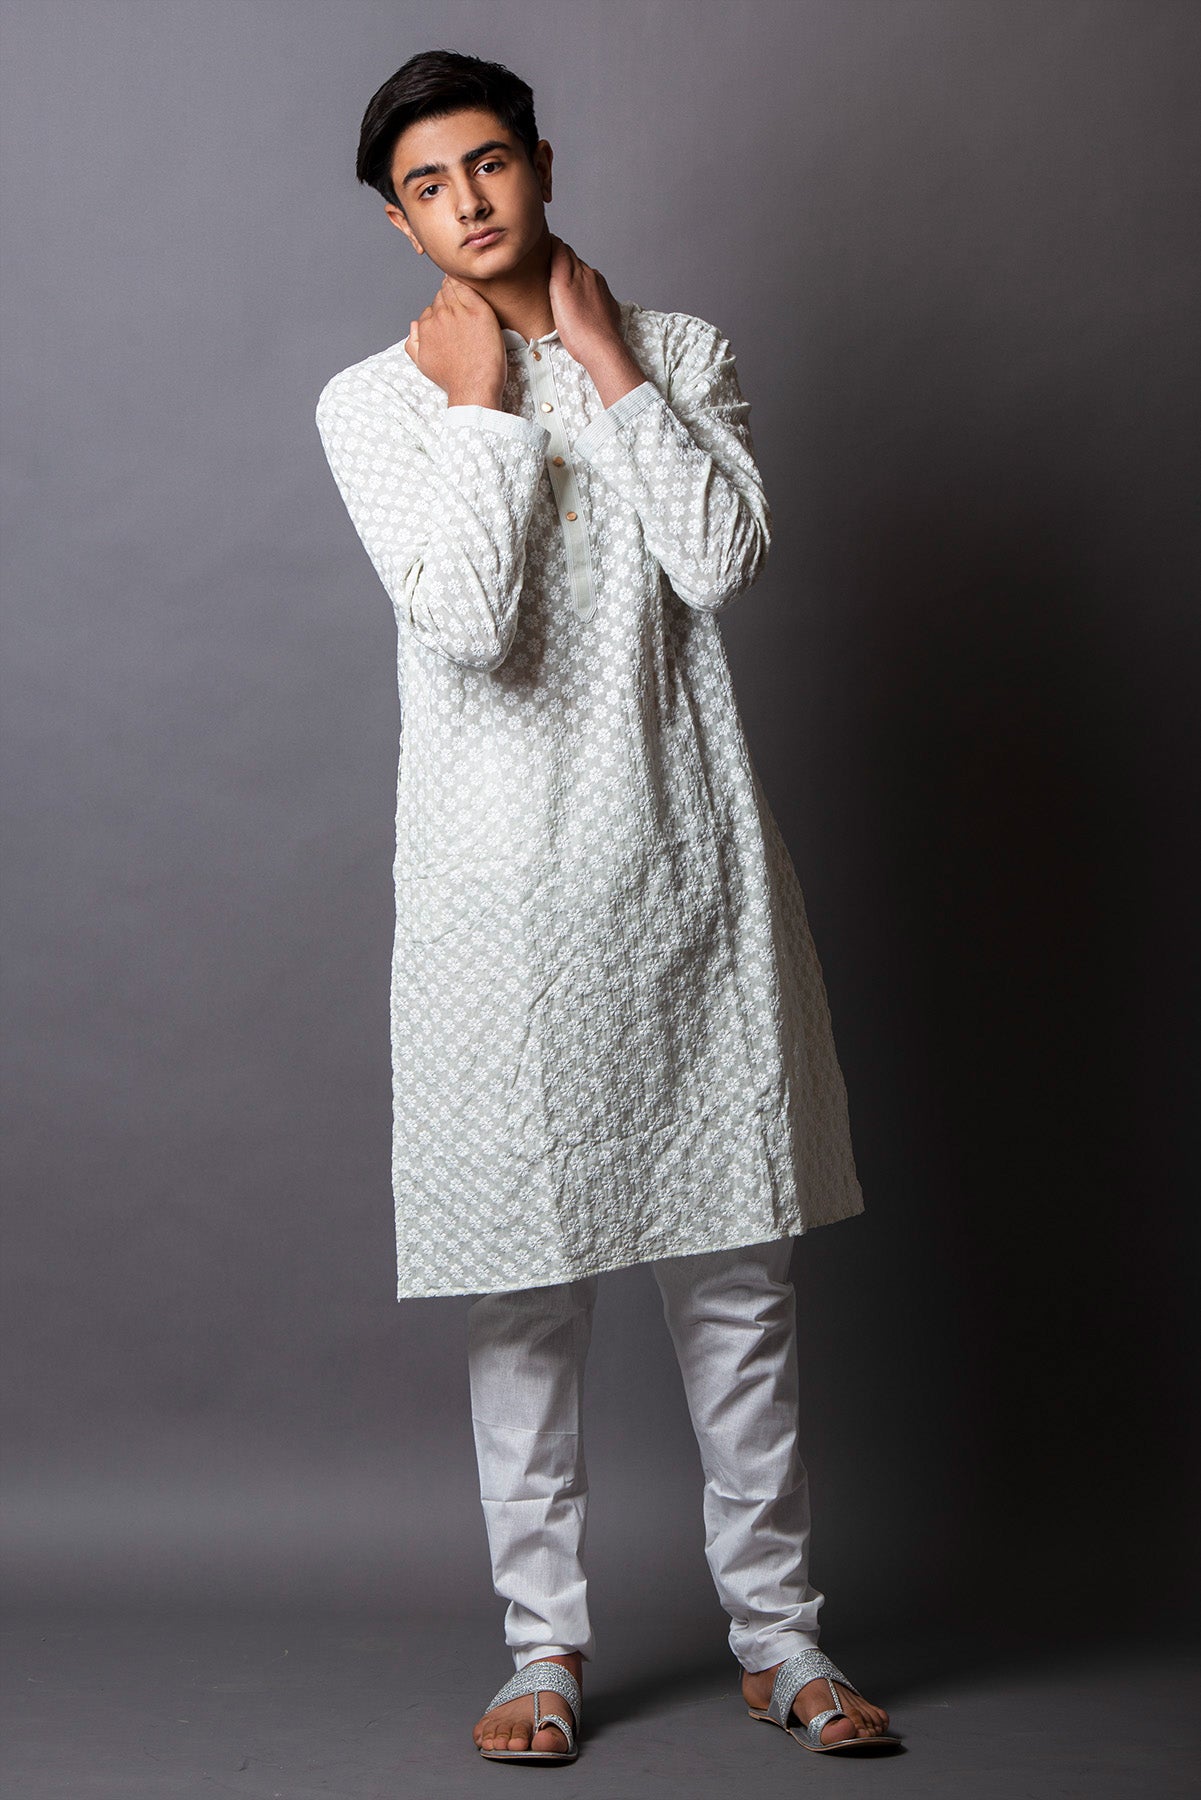 
                  
                    Kurtan Pajama Design no. 004
                  
                